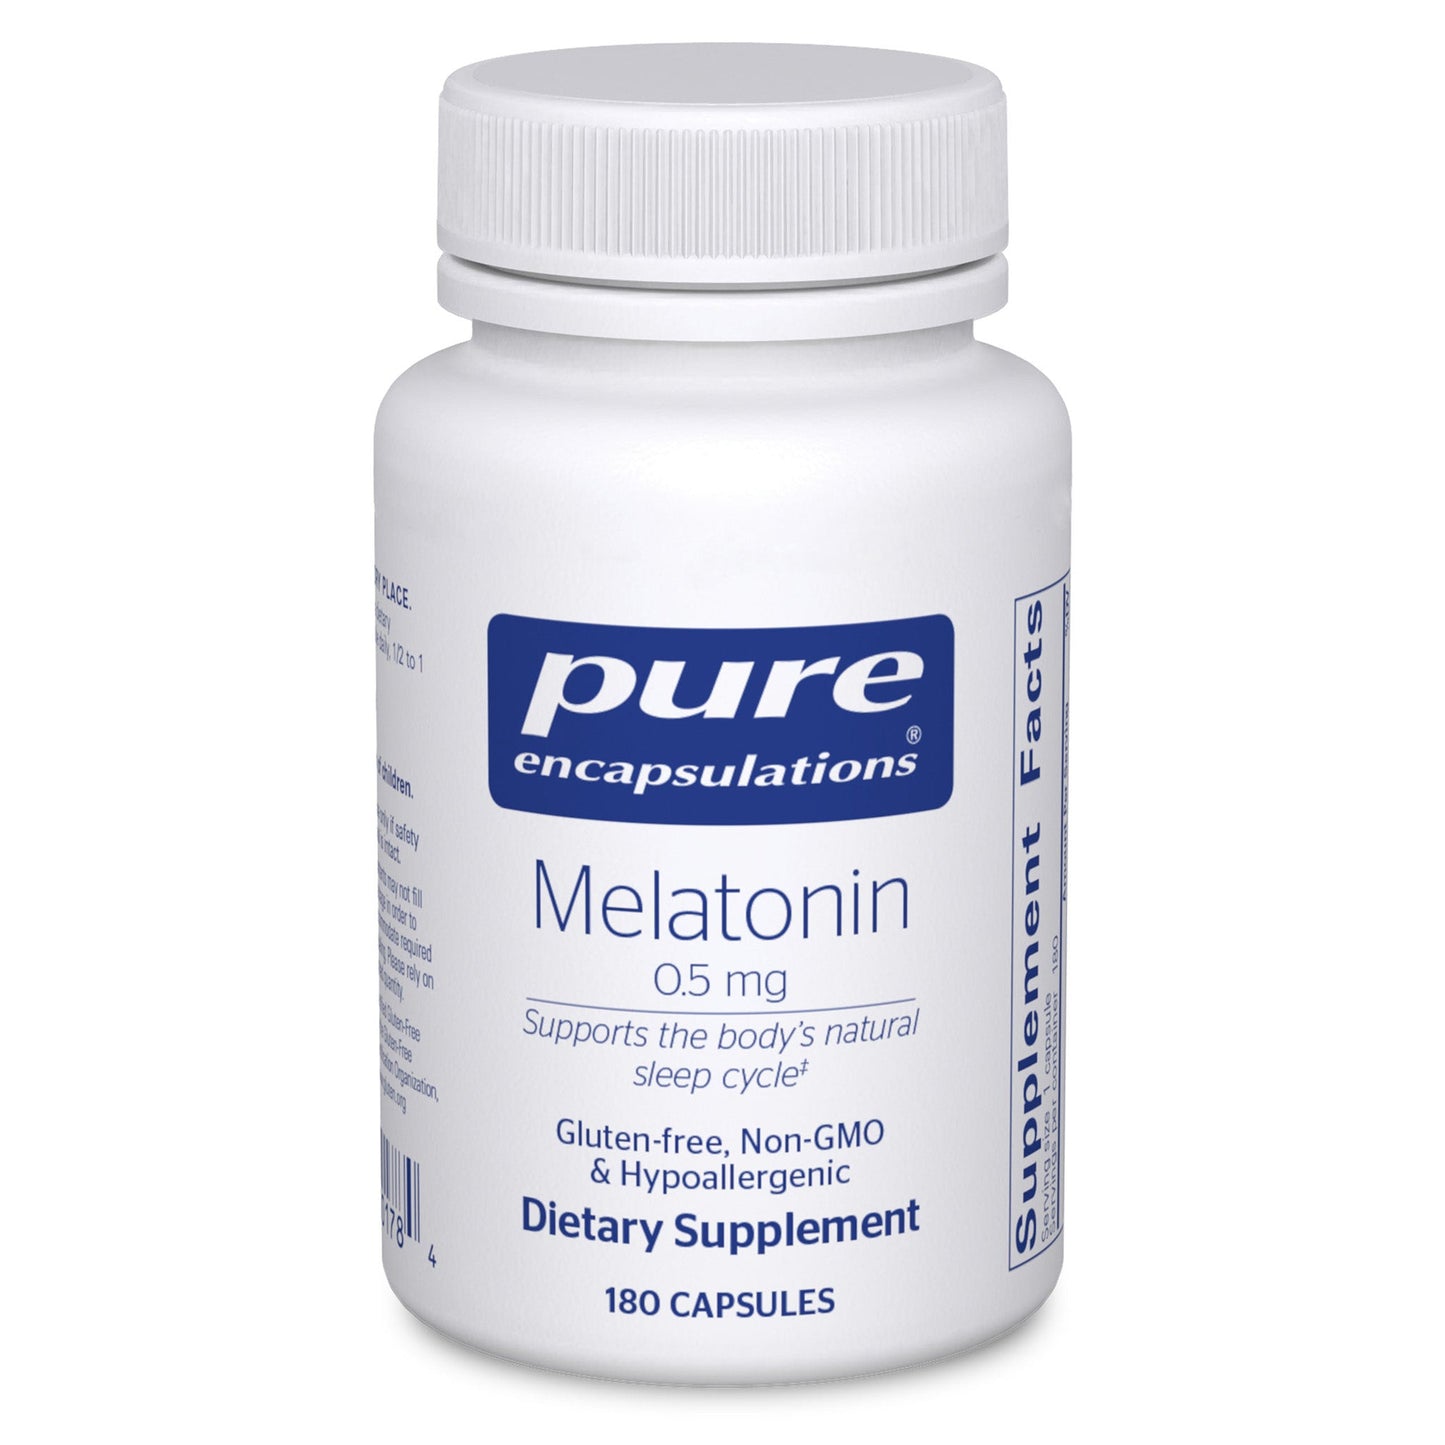 Melatonin 0.5 mg